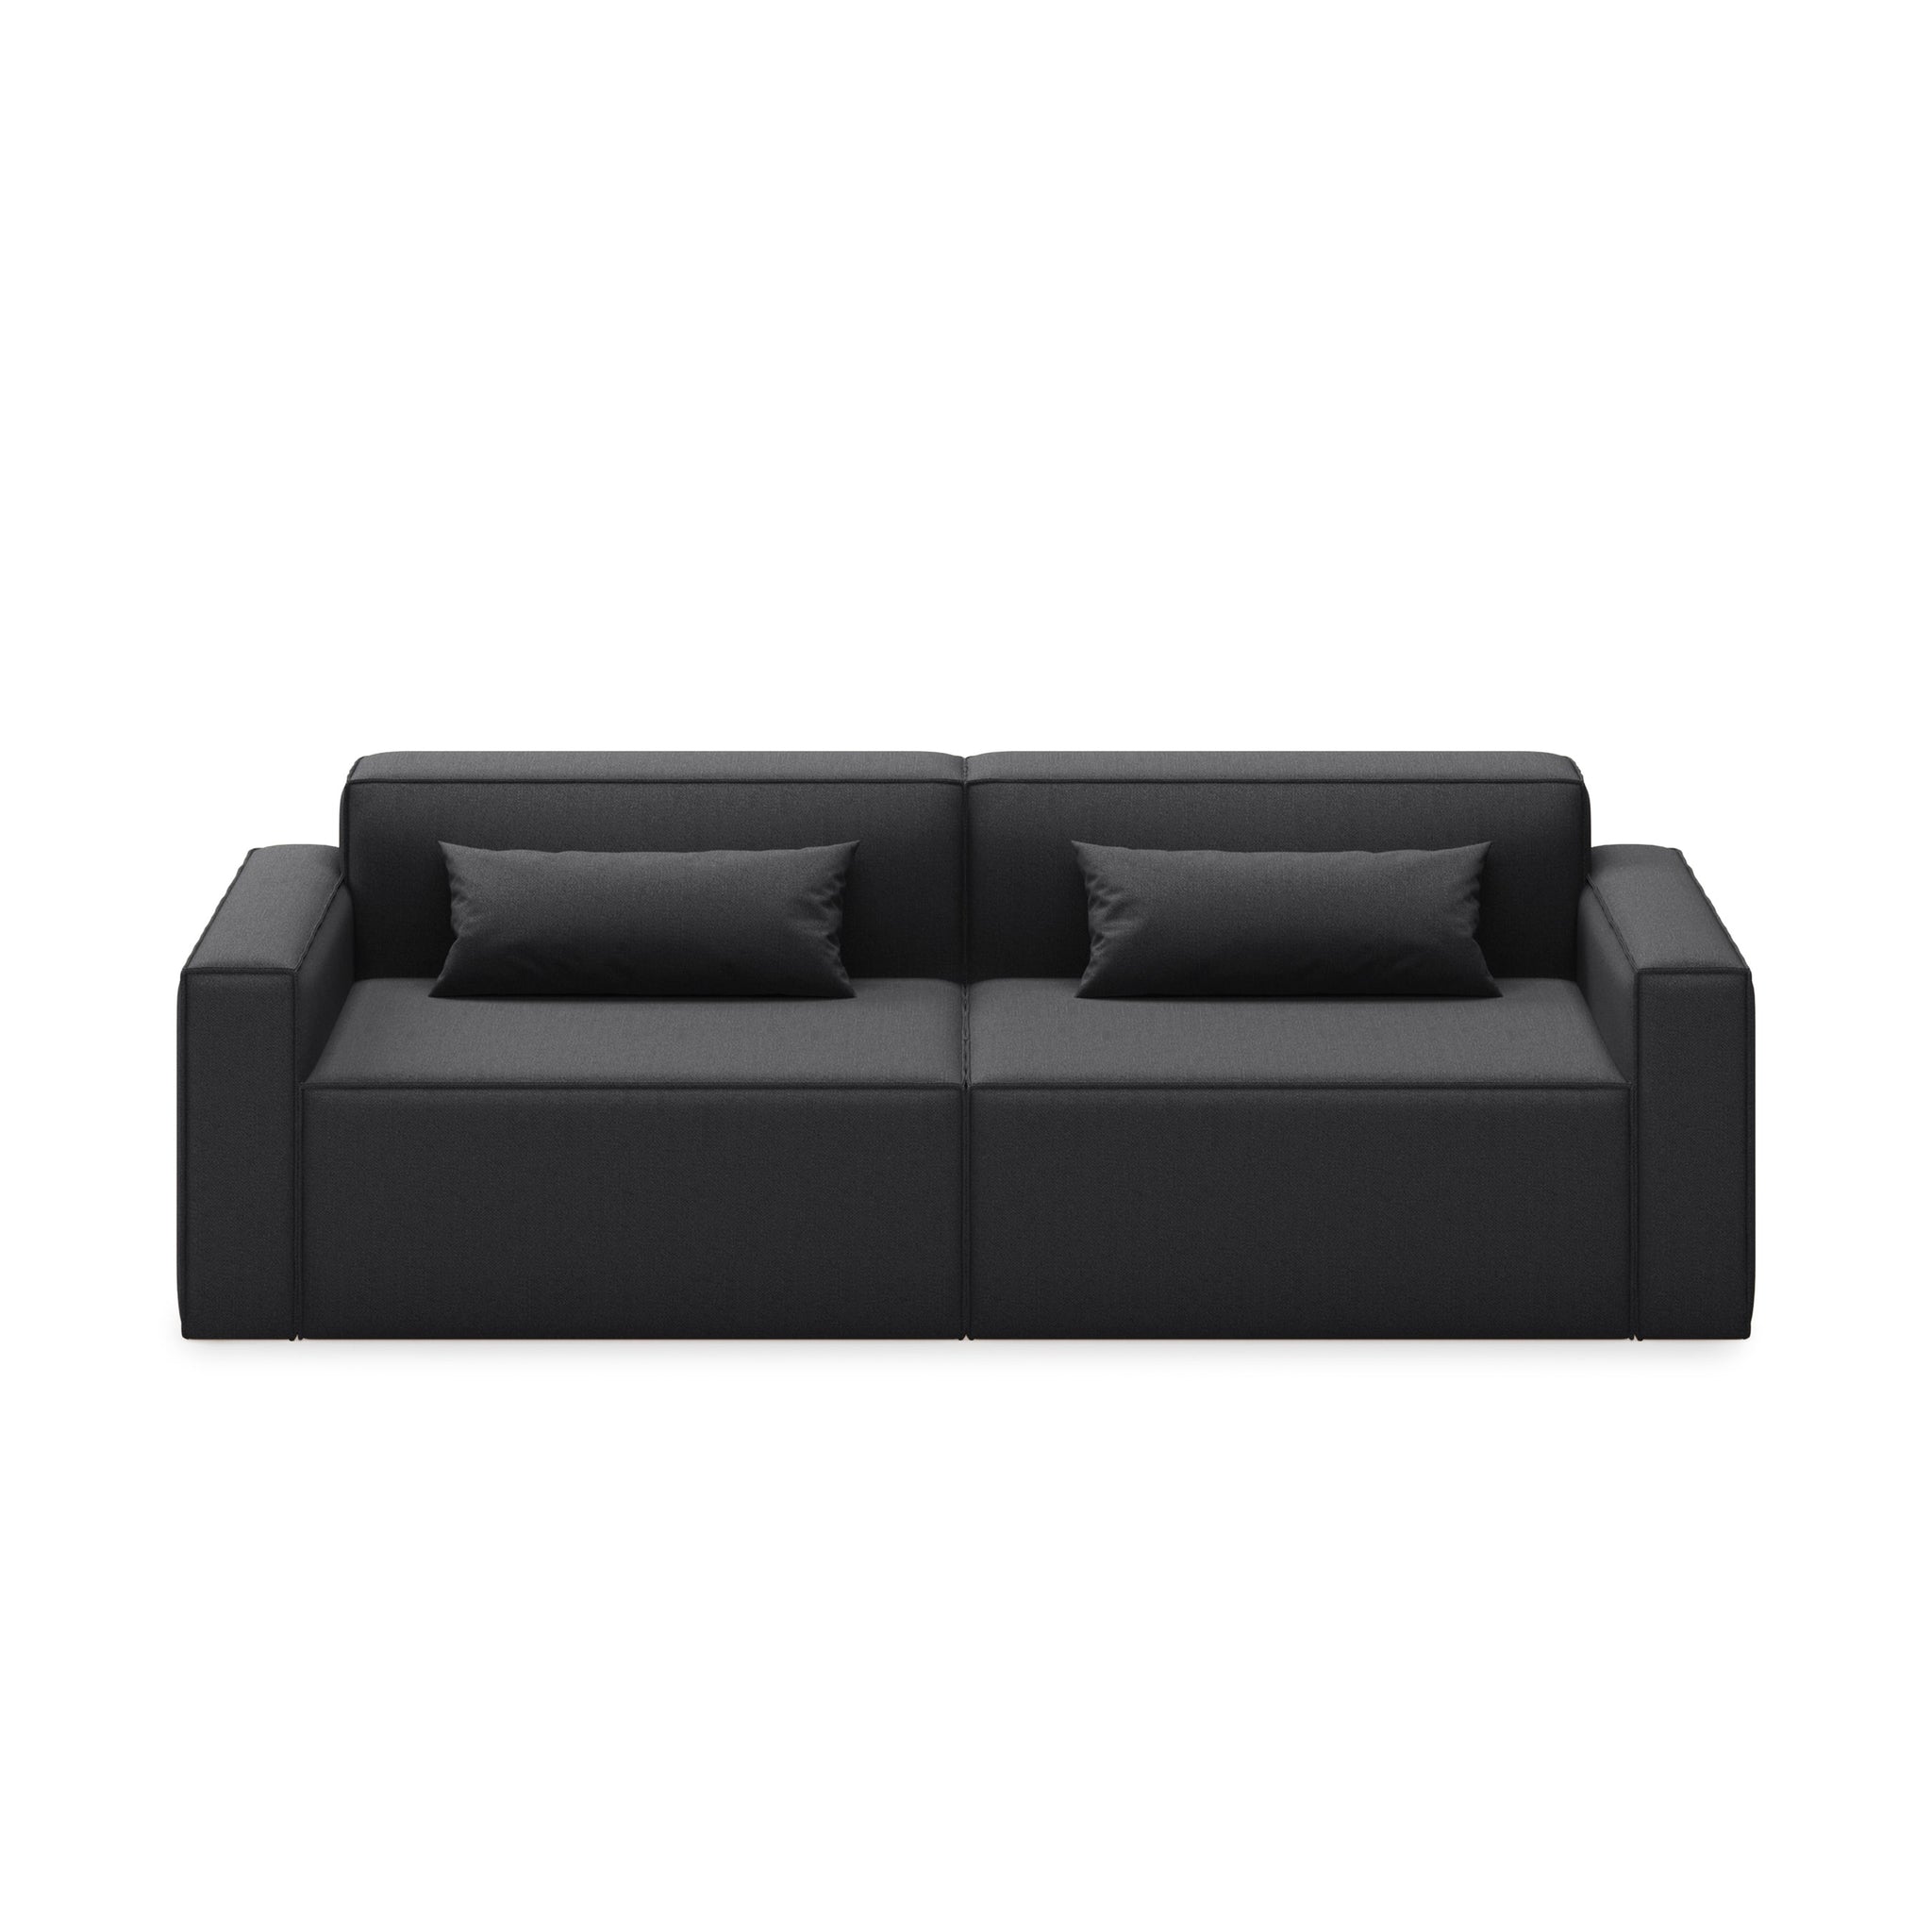 Mix Modular Sofa 2 Pc Stylegarage